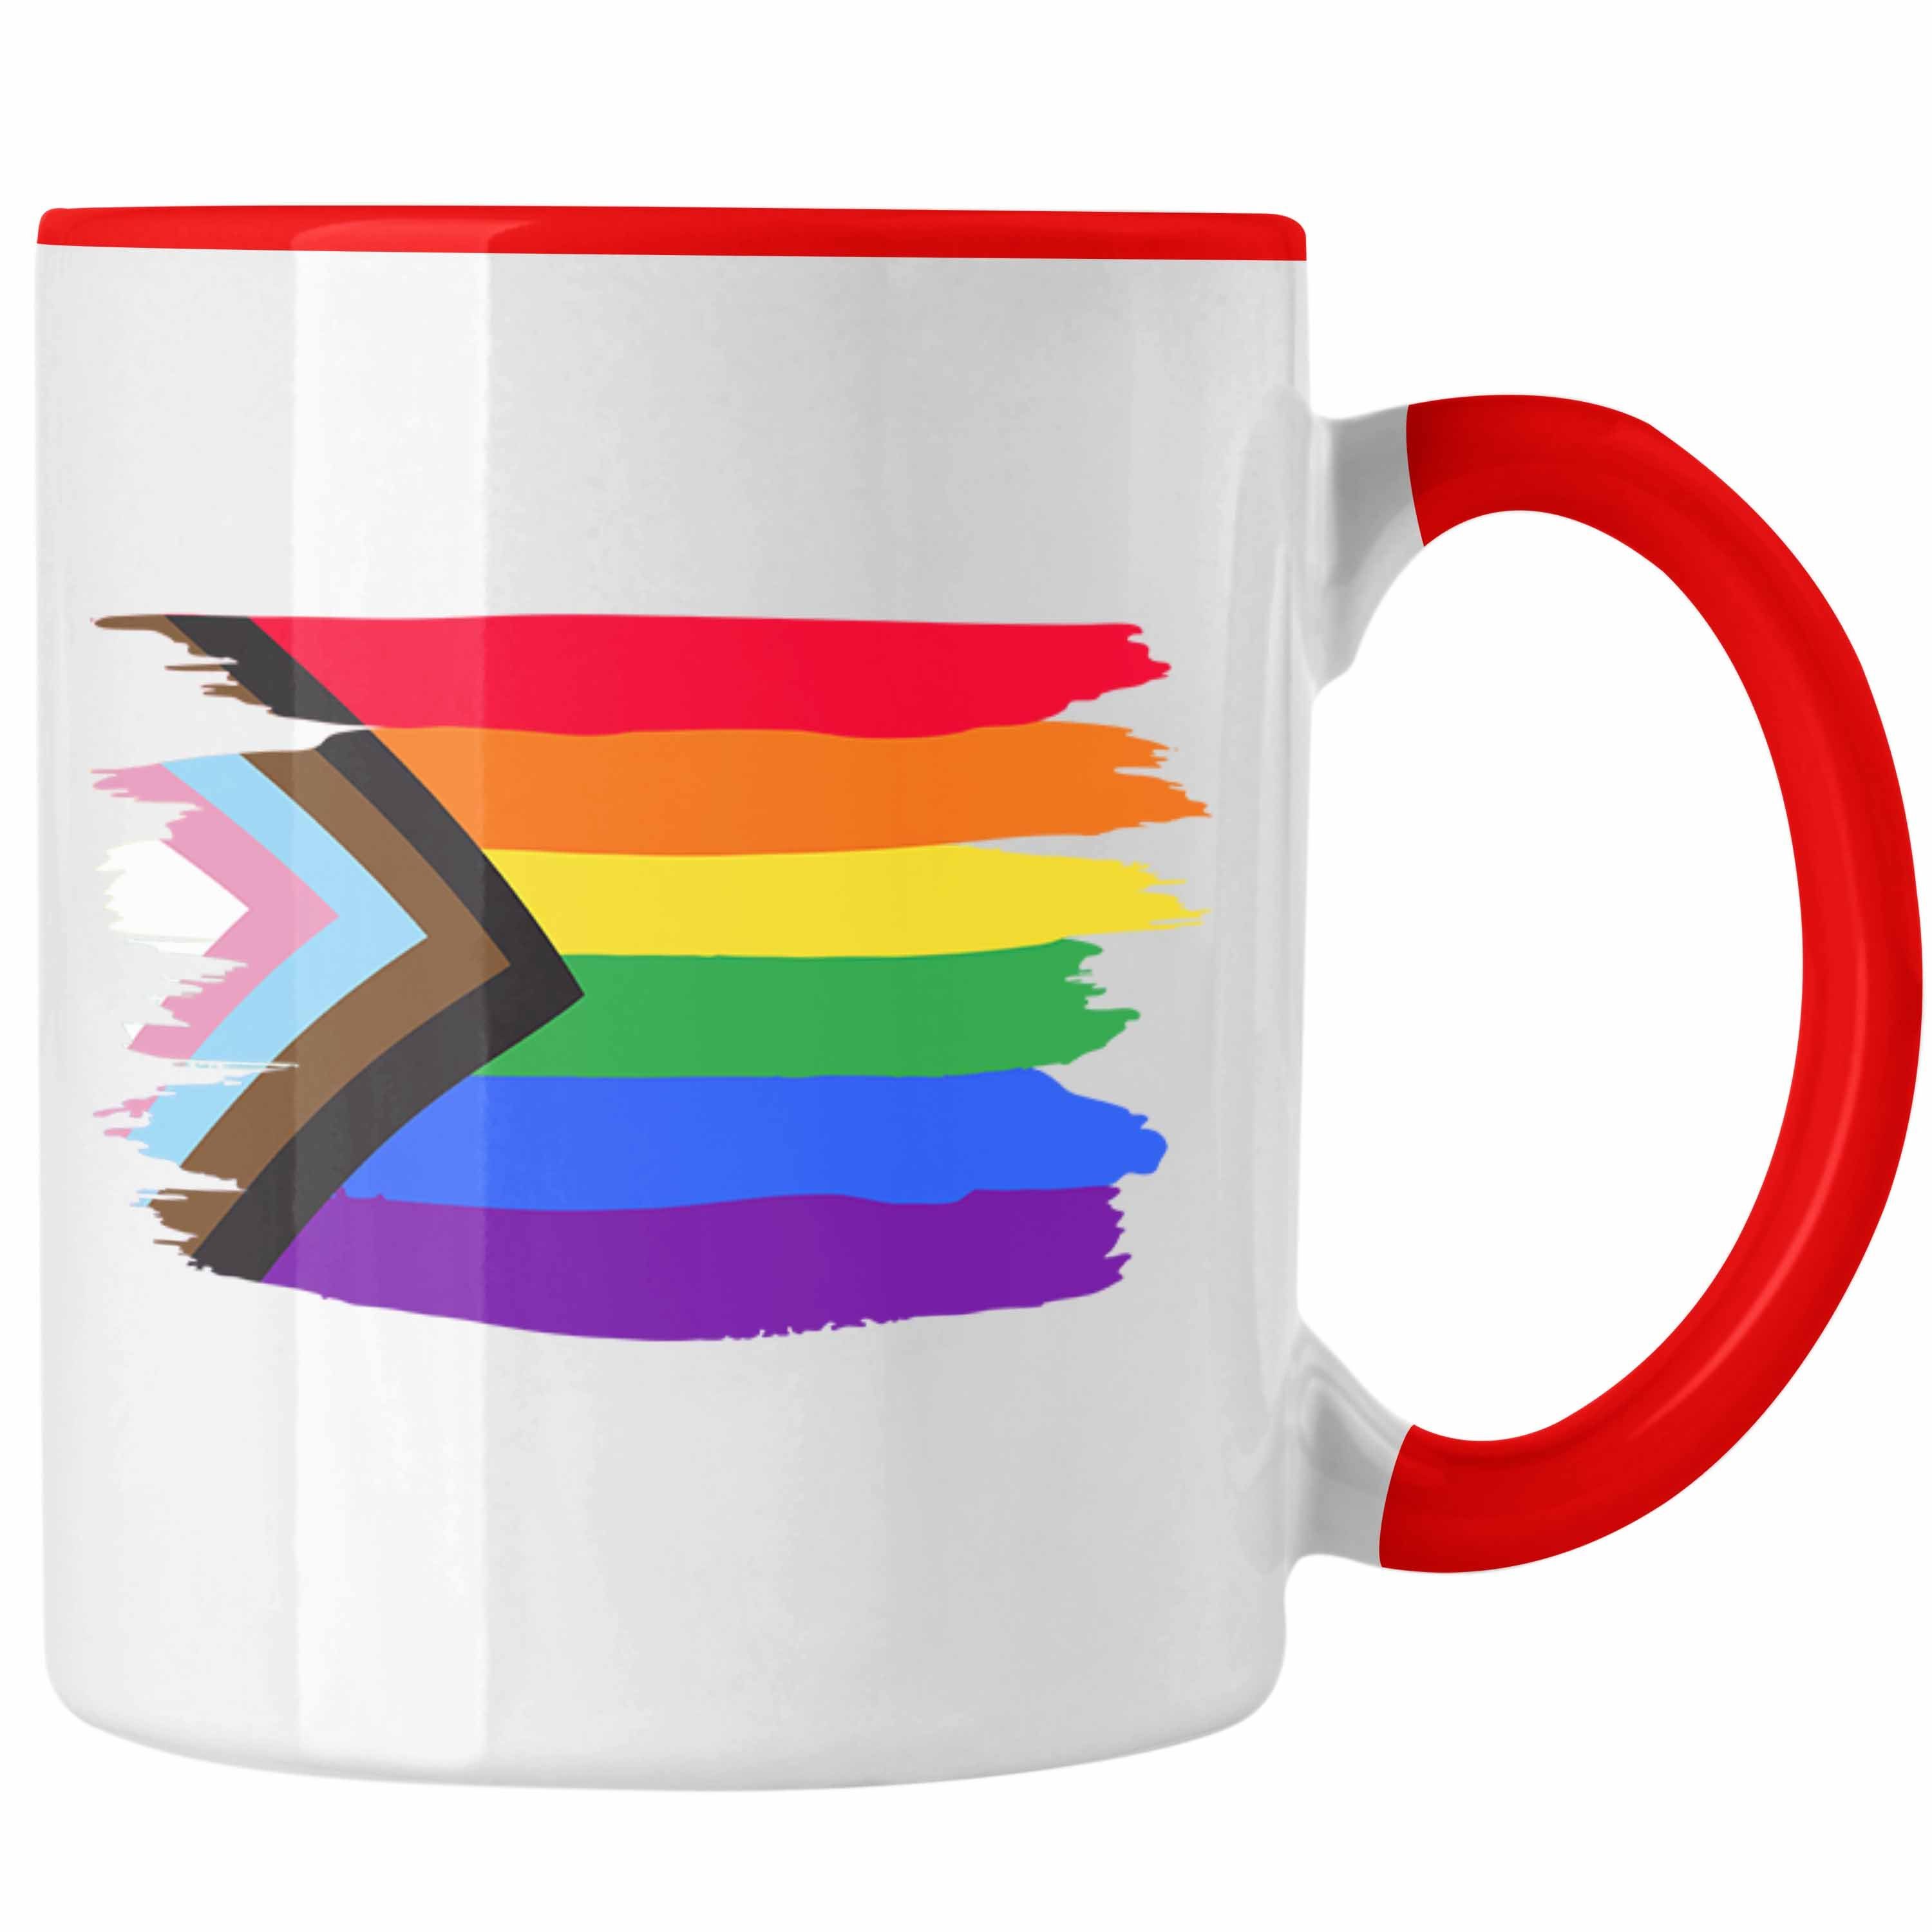 Trendation Tasse Trendation - Regenbogen Tasse Geschenk LGBT Schwule Lesben Transgender Grafik Pride Flagge Rot